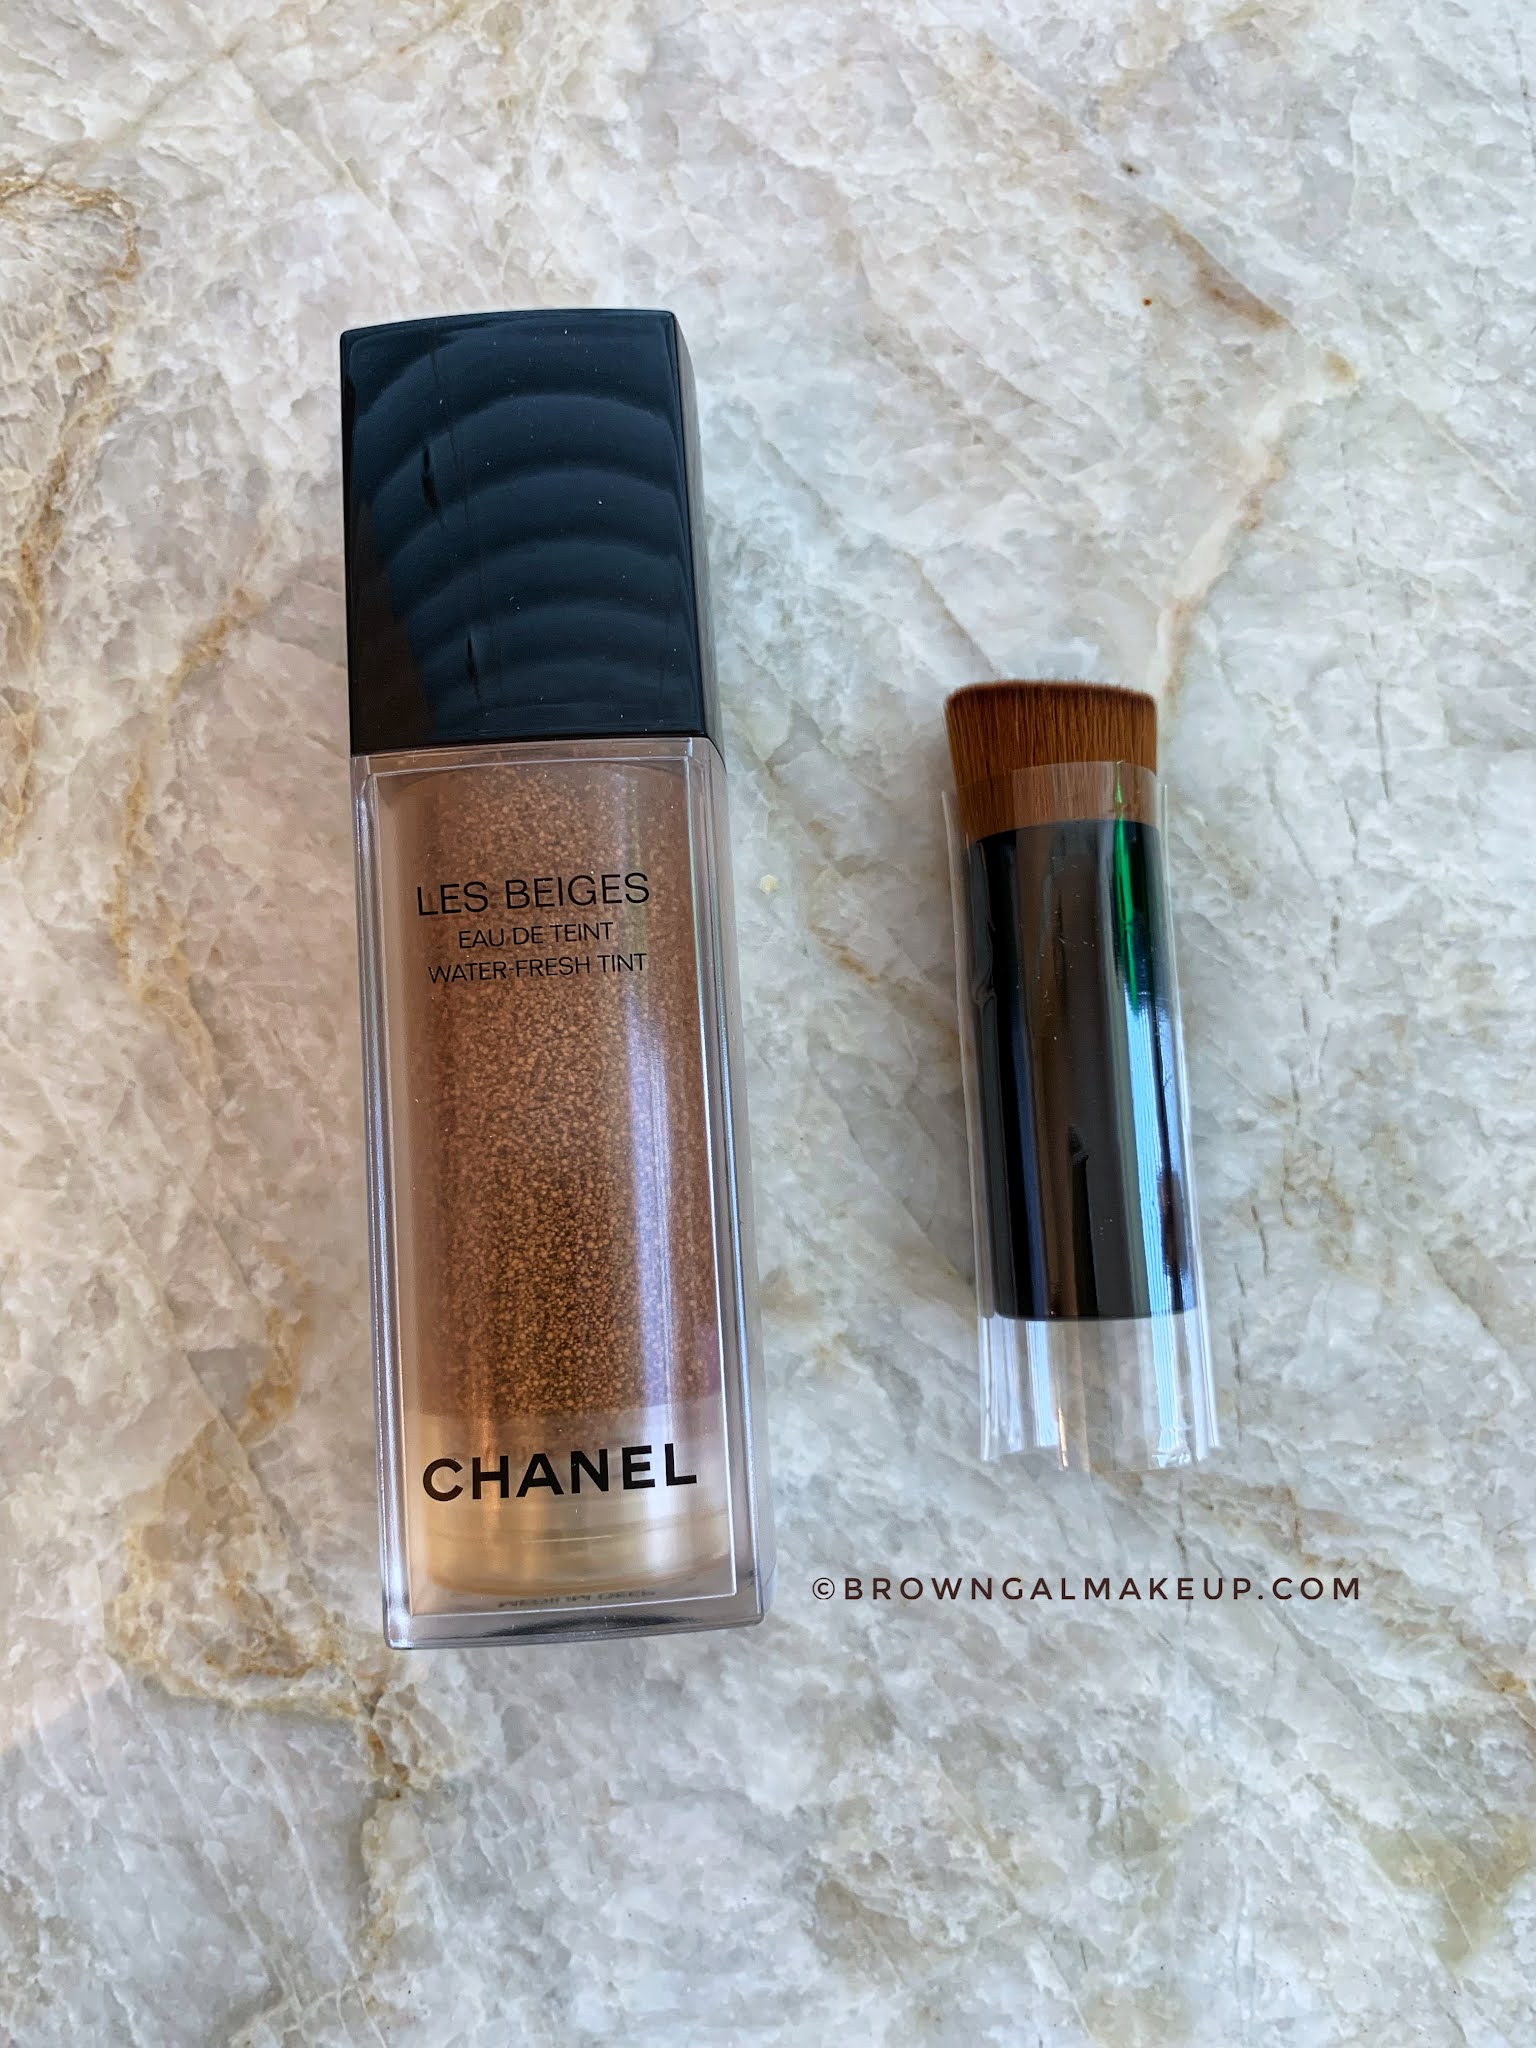 Chanel Les Beiges Water Fresh Tint Medium 1.0 Ounce